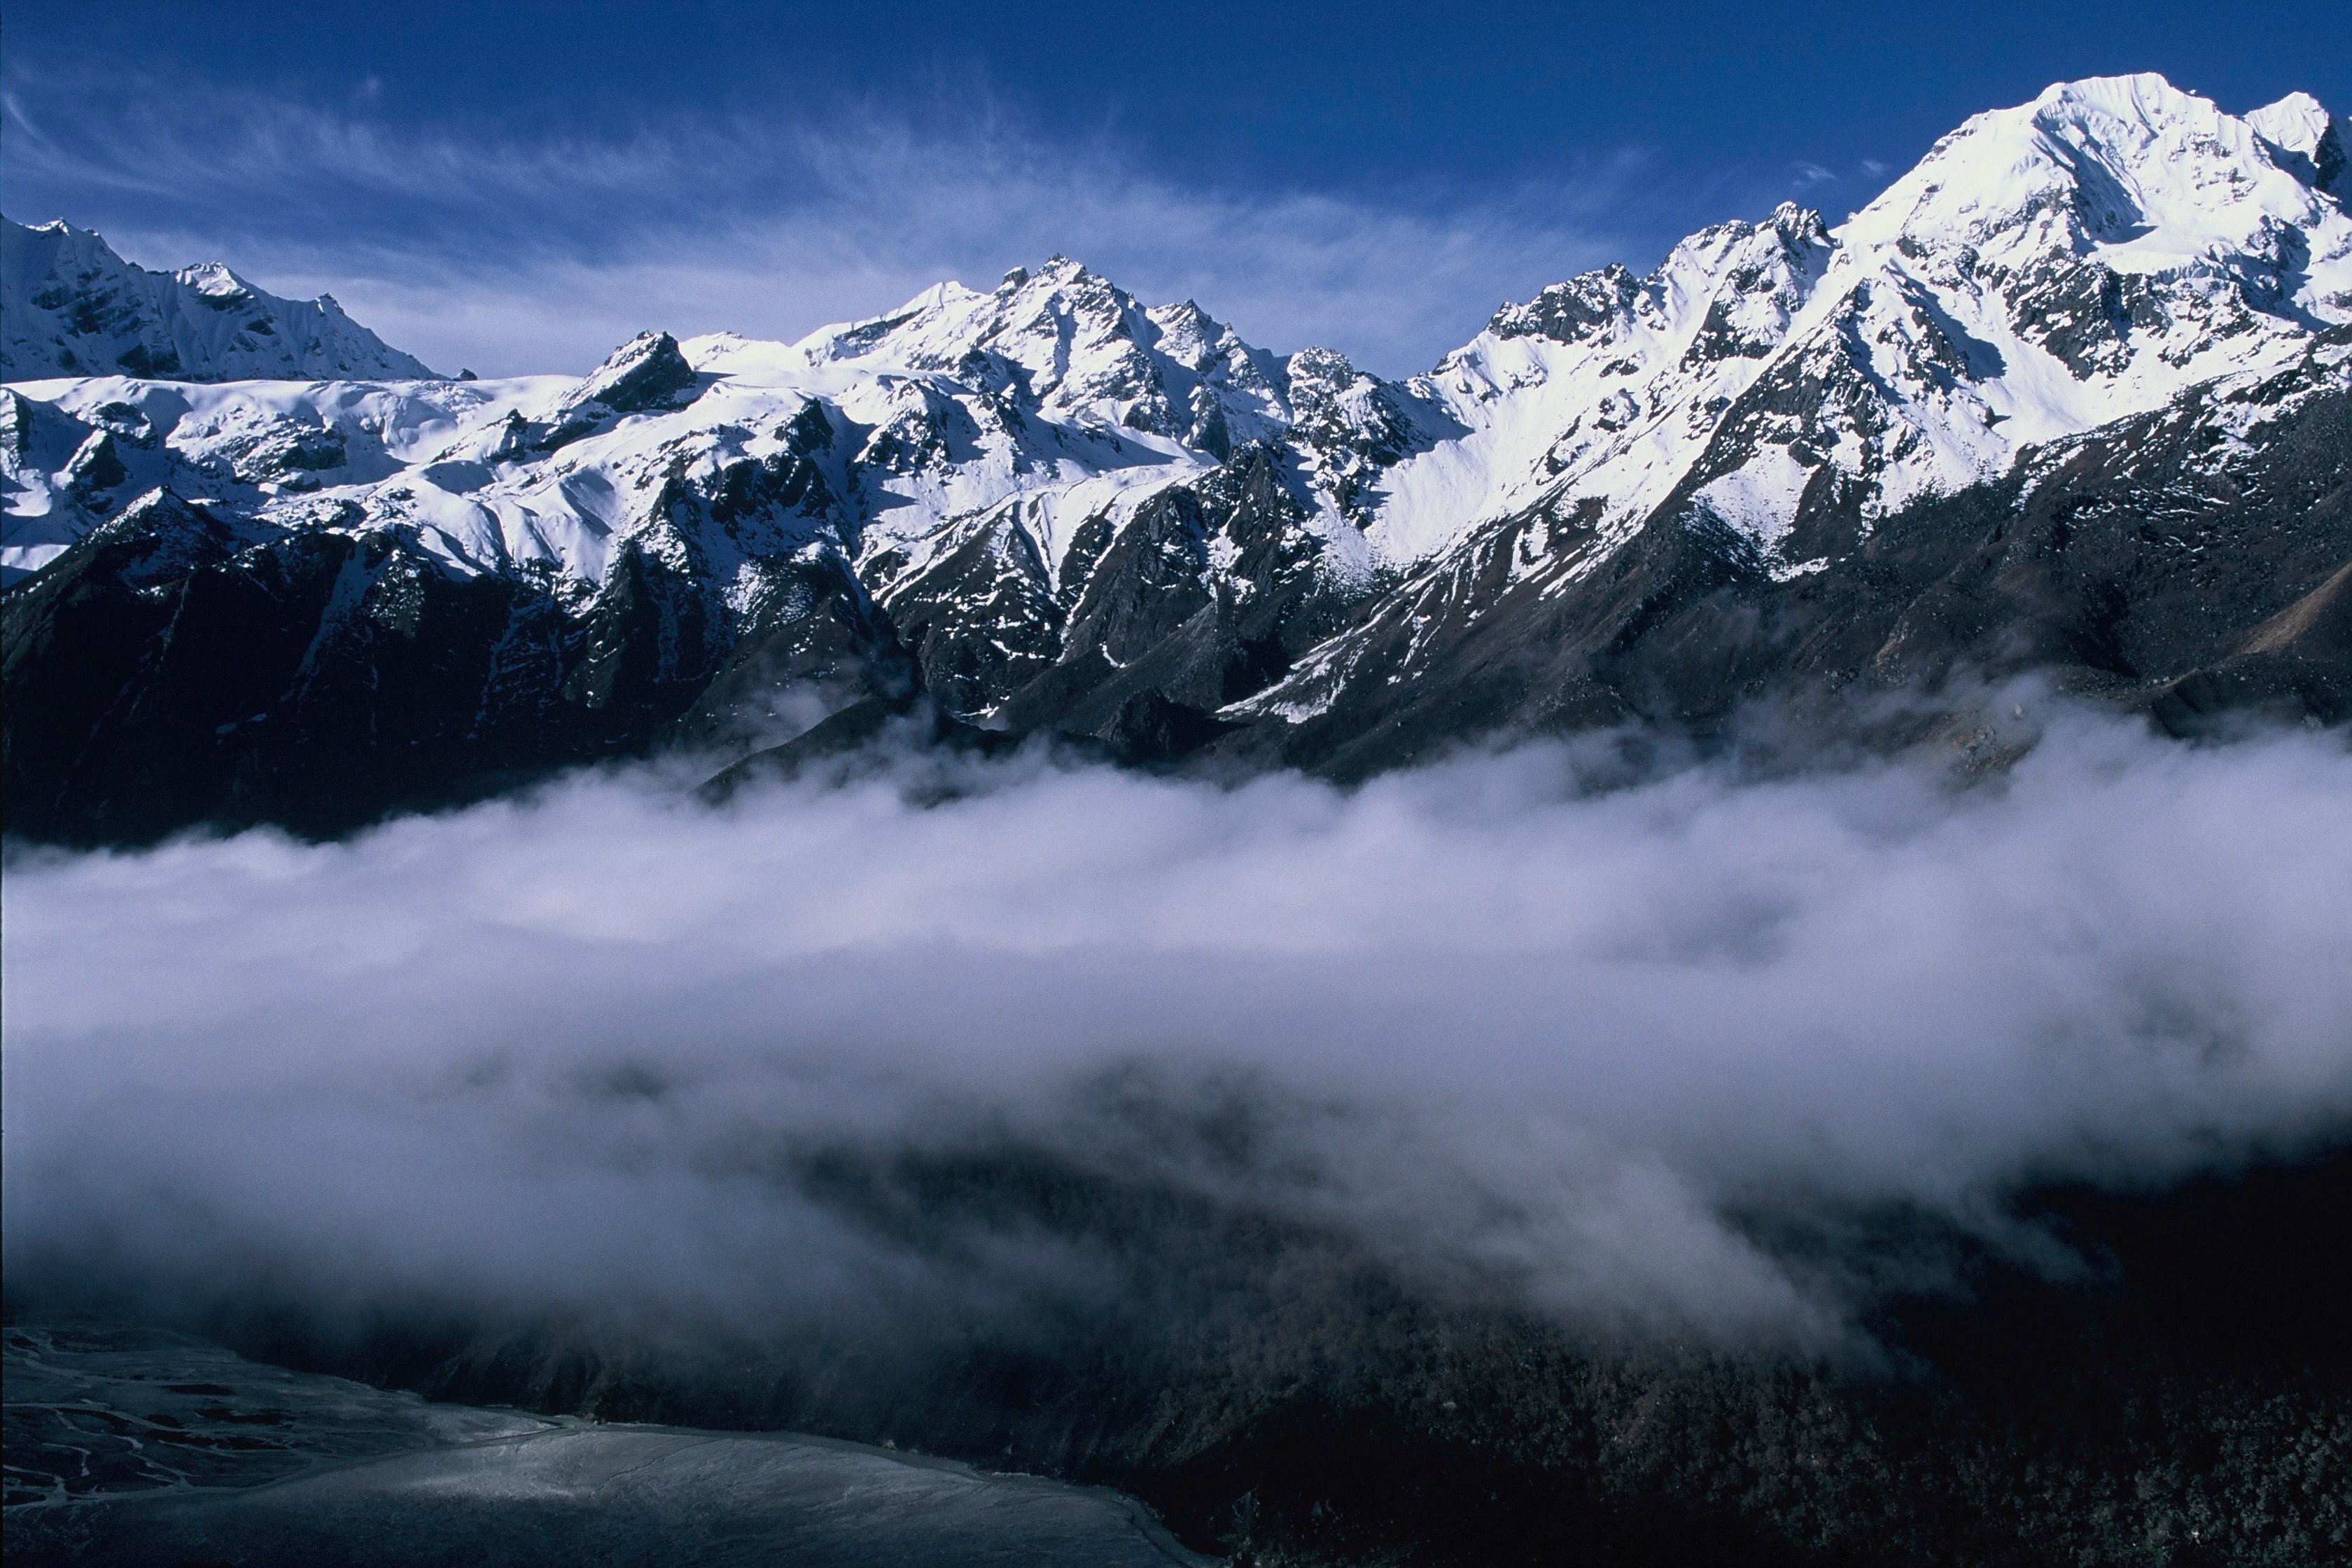 The Hindu Kush Himalaya is one of the greatest mountain systems in the world, covering 4.2 million sq km across eight countries: Afghanistan, Bangladesh, Bhutan, China, India, Myanmar, Nepal and Pakistan. Photo: EPA-EFE / ICIMOD